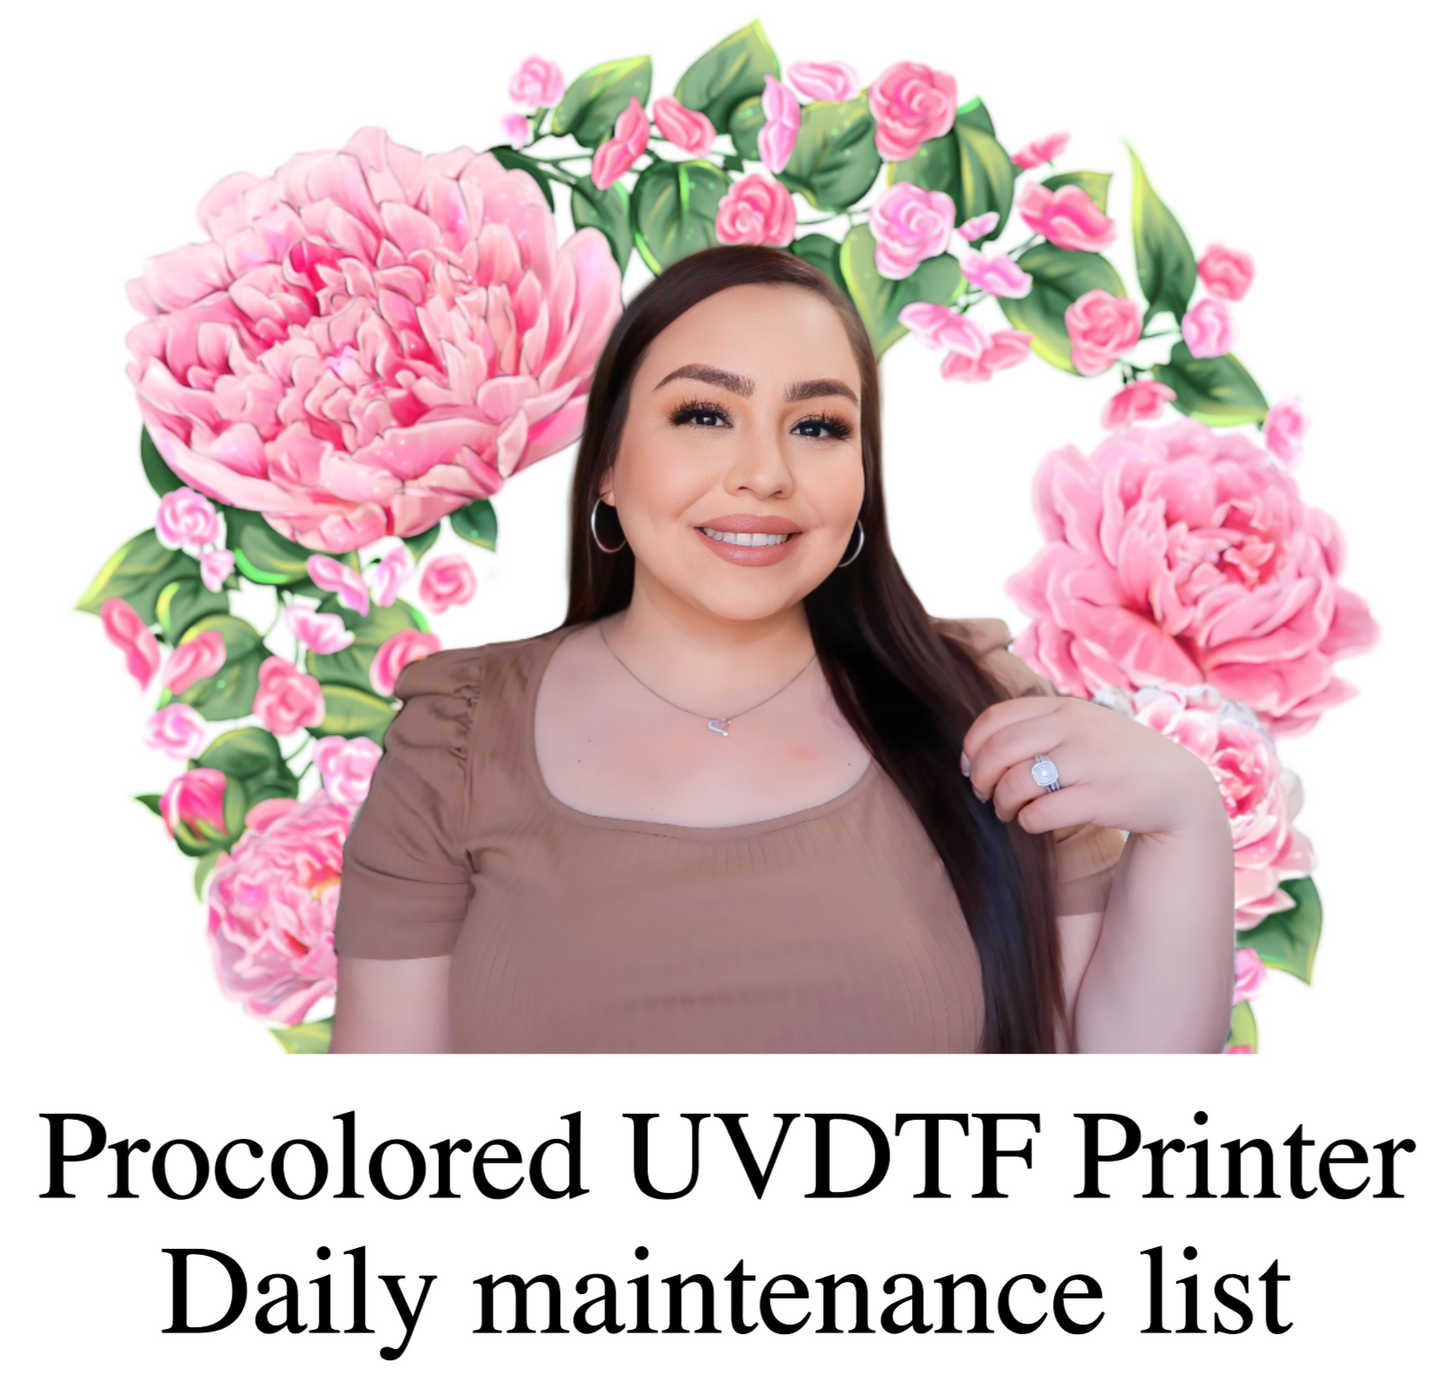 Daily maintenance list - UVDTF Printer